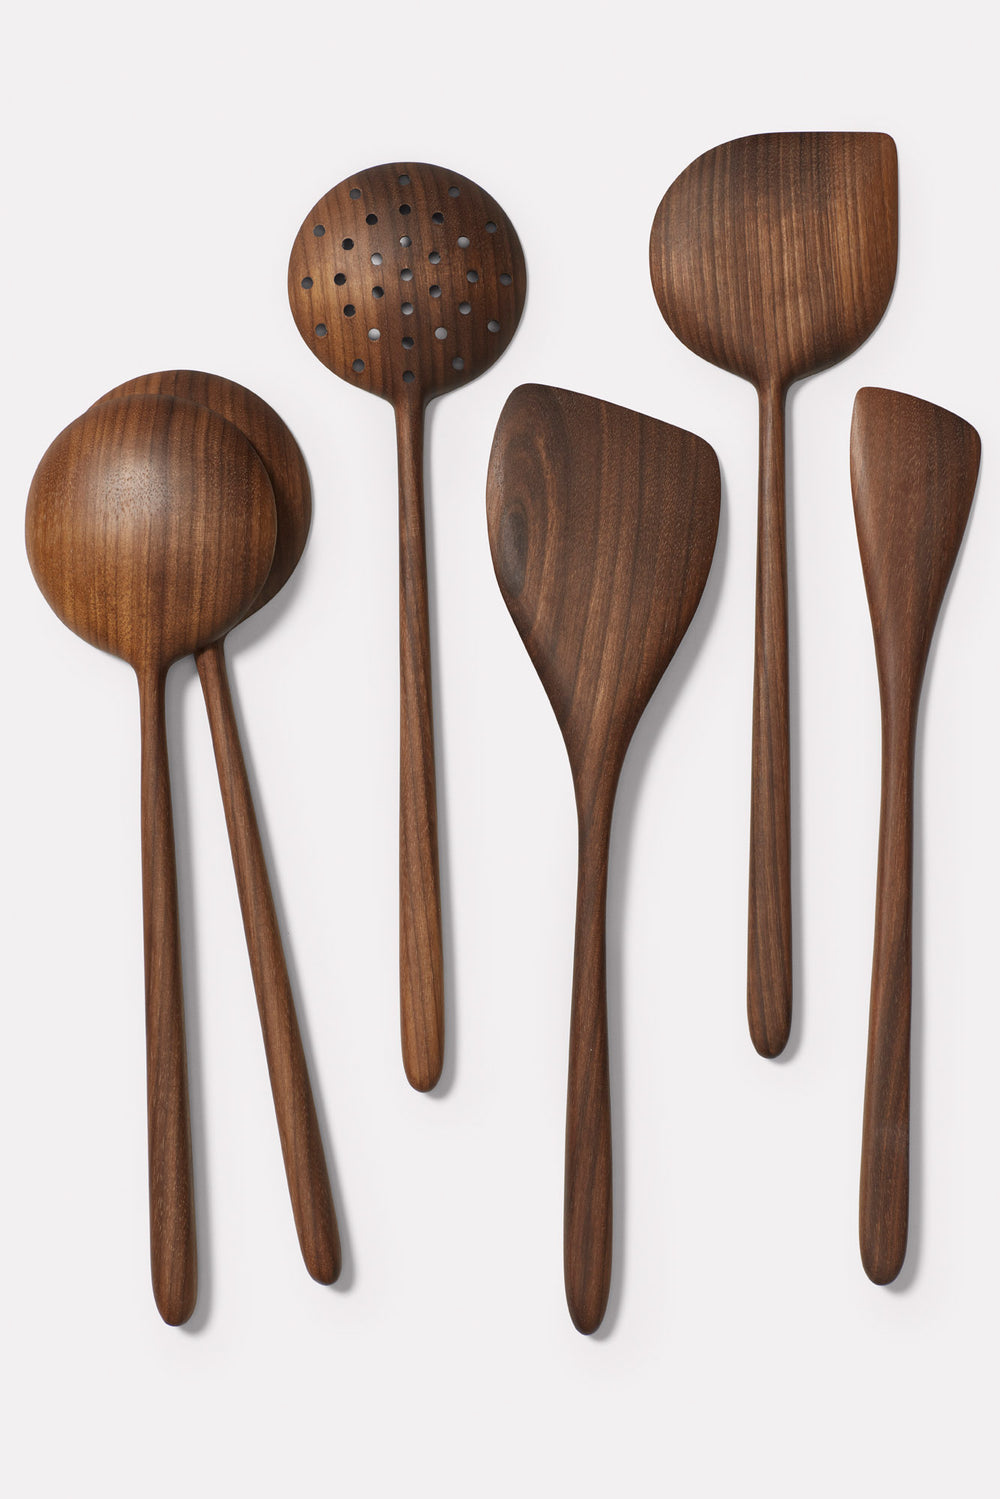 Handmade Wood Spoon Set - Made in the USA - , LLC